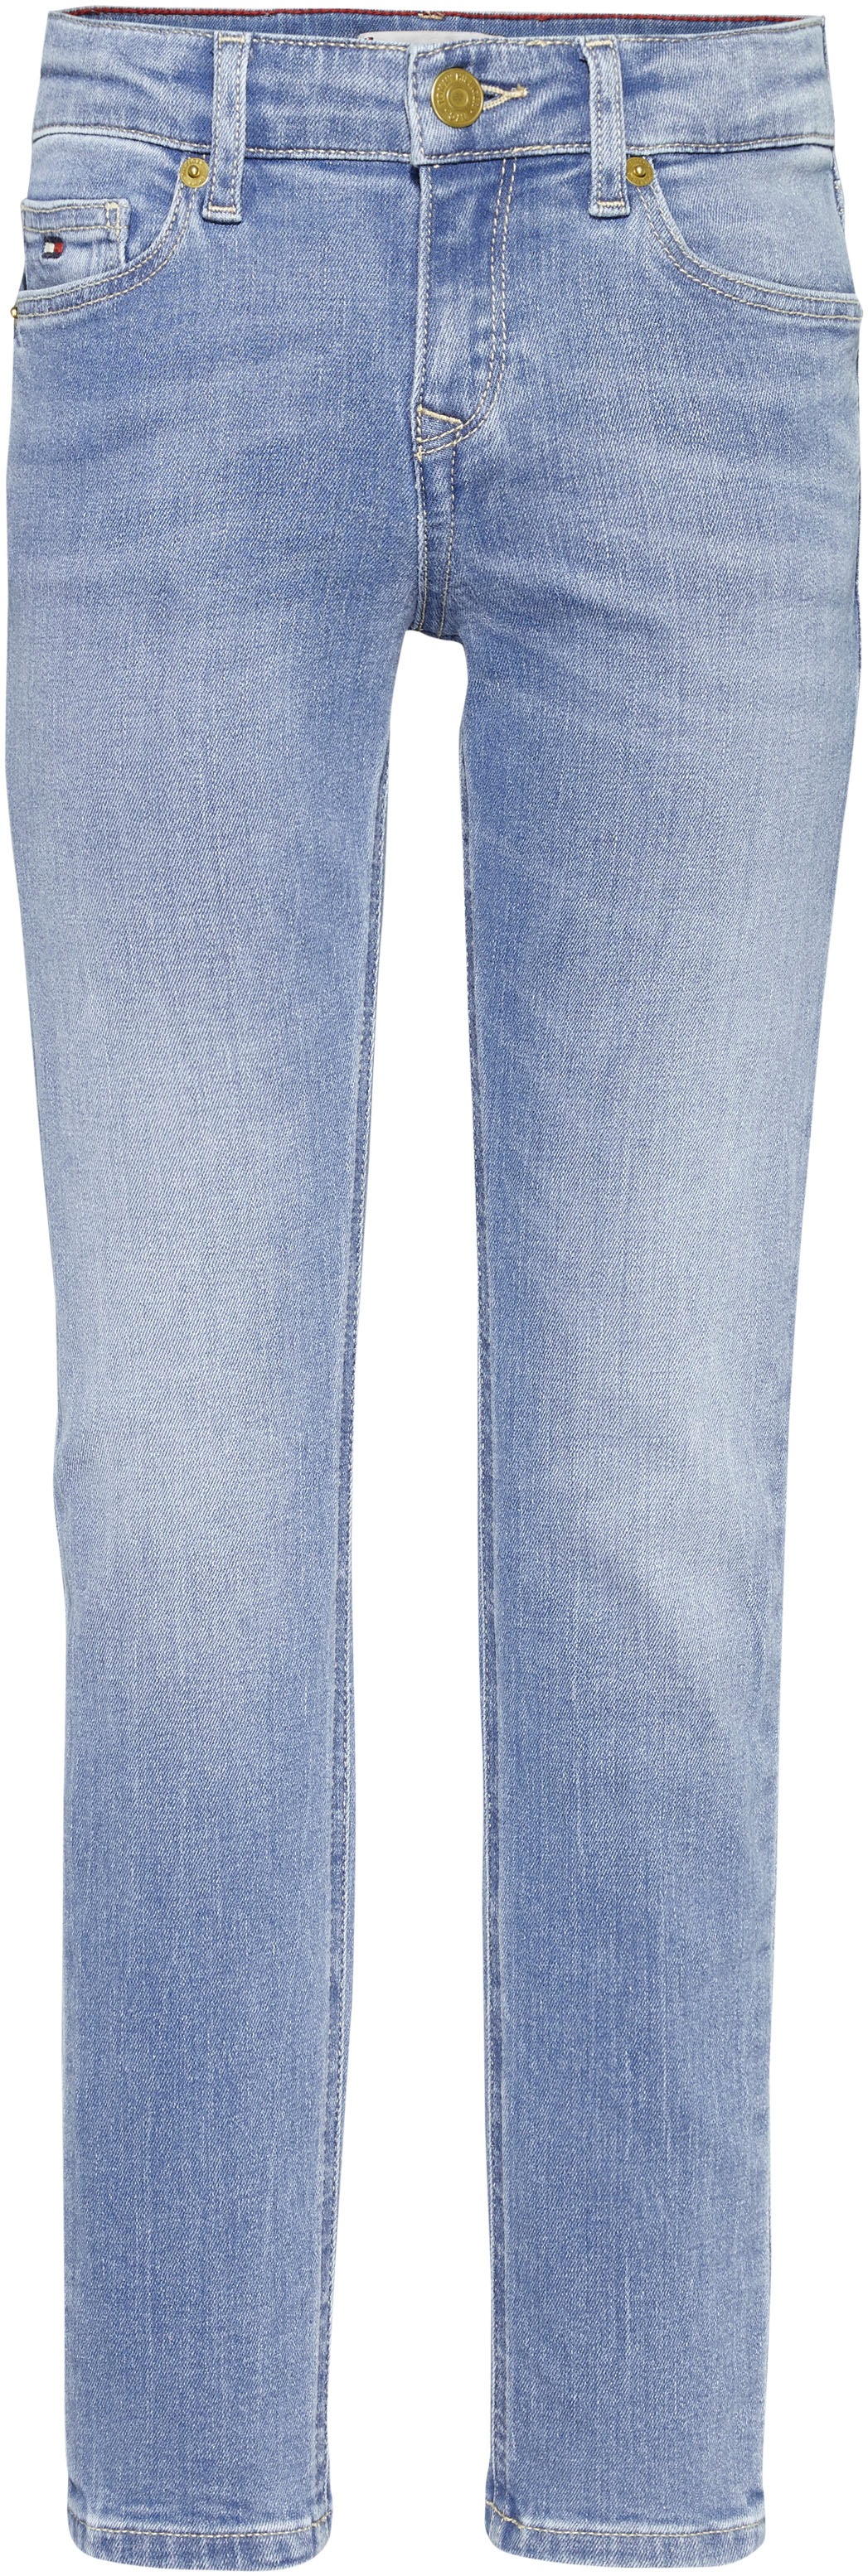 Tommy Hilfiger Stretch-Jeans »NORA SKINNY« kaufen bei OTTO